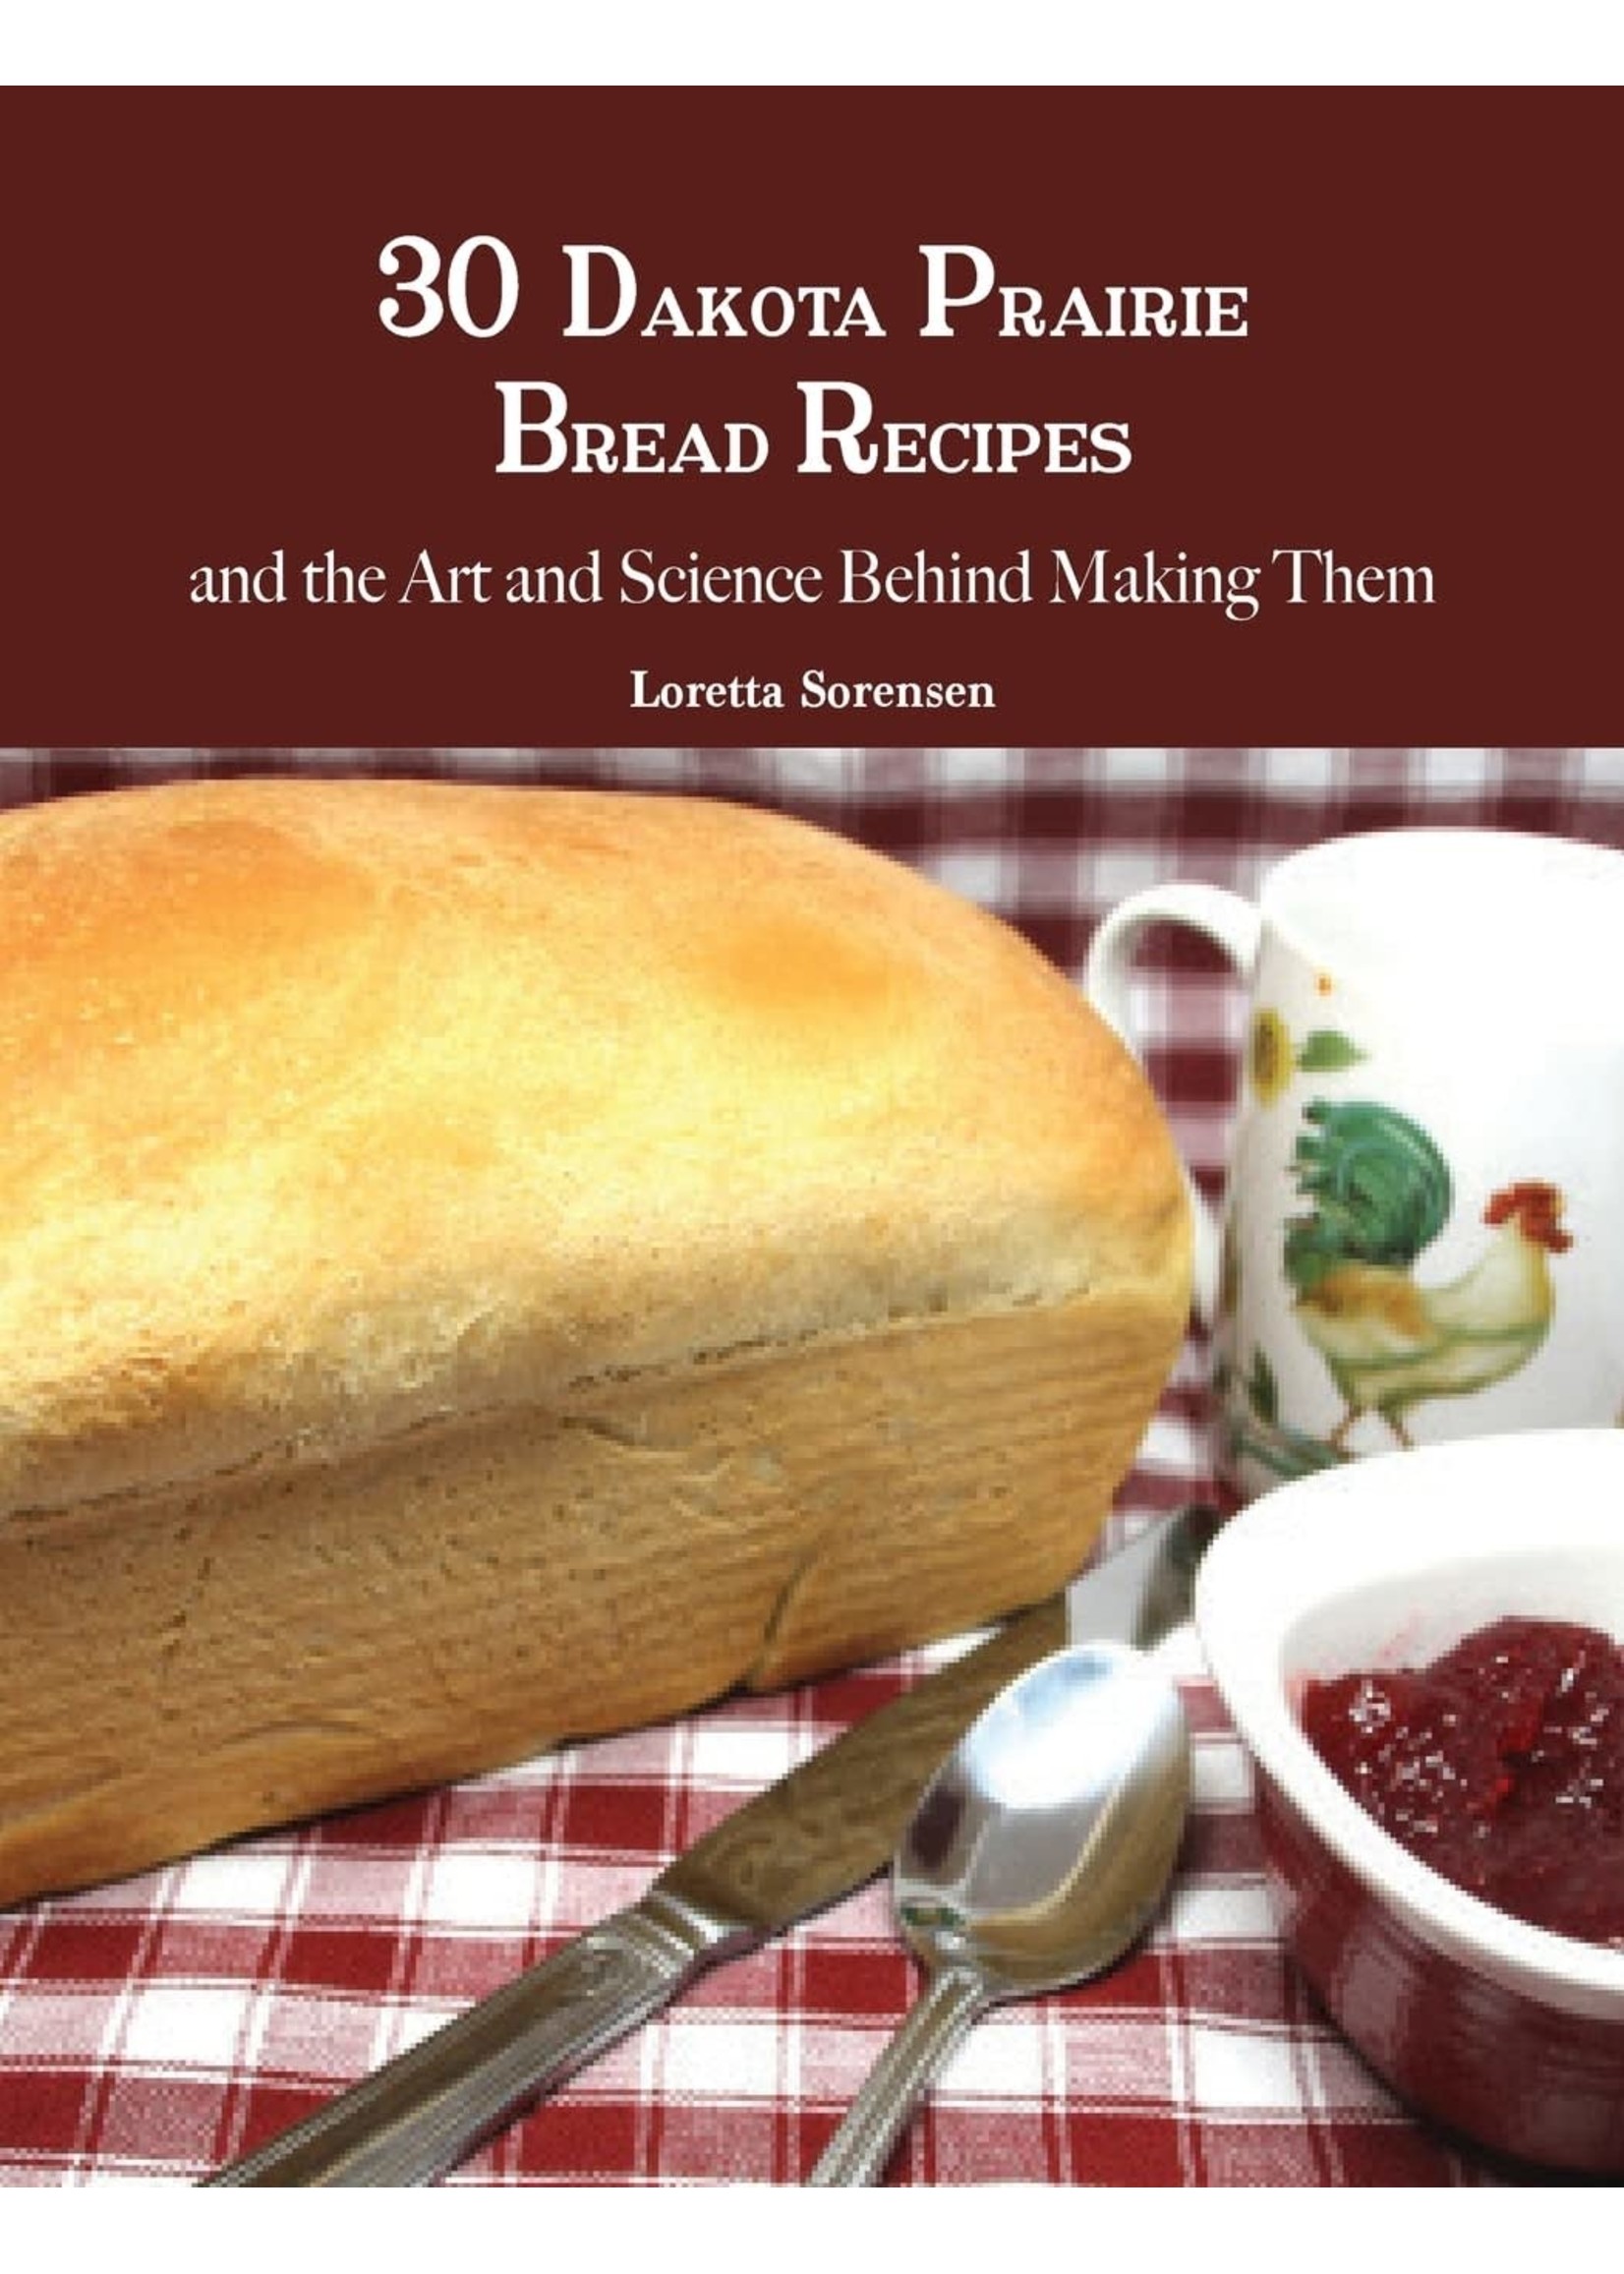 30 Dakota Prairie Bread Recipes by Loretta Sorenson